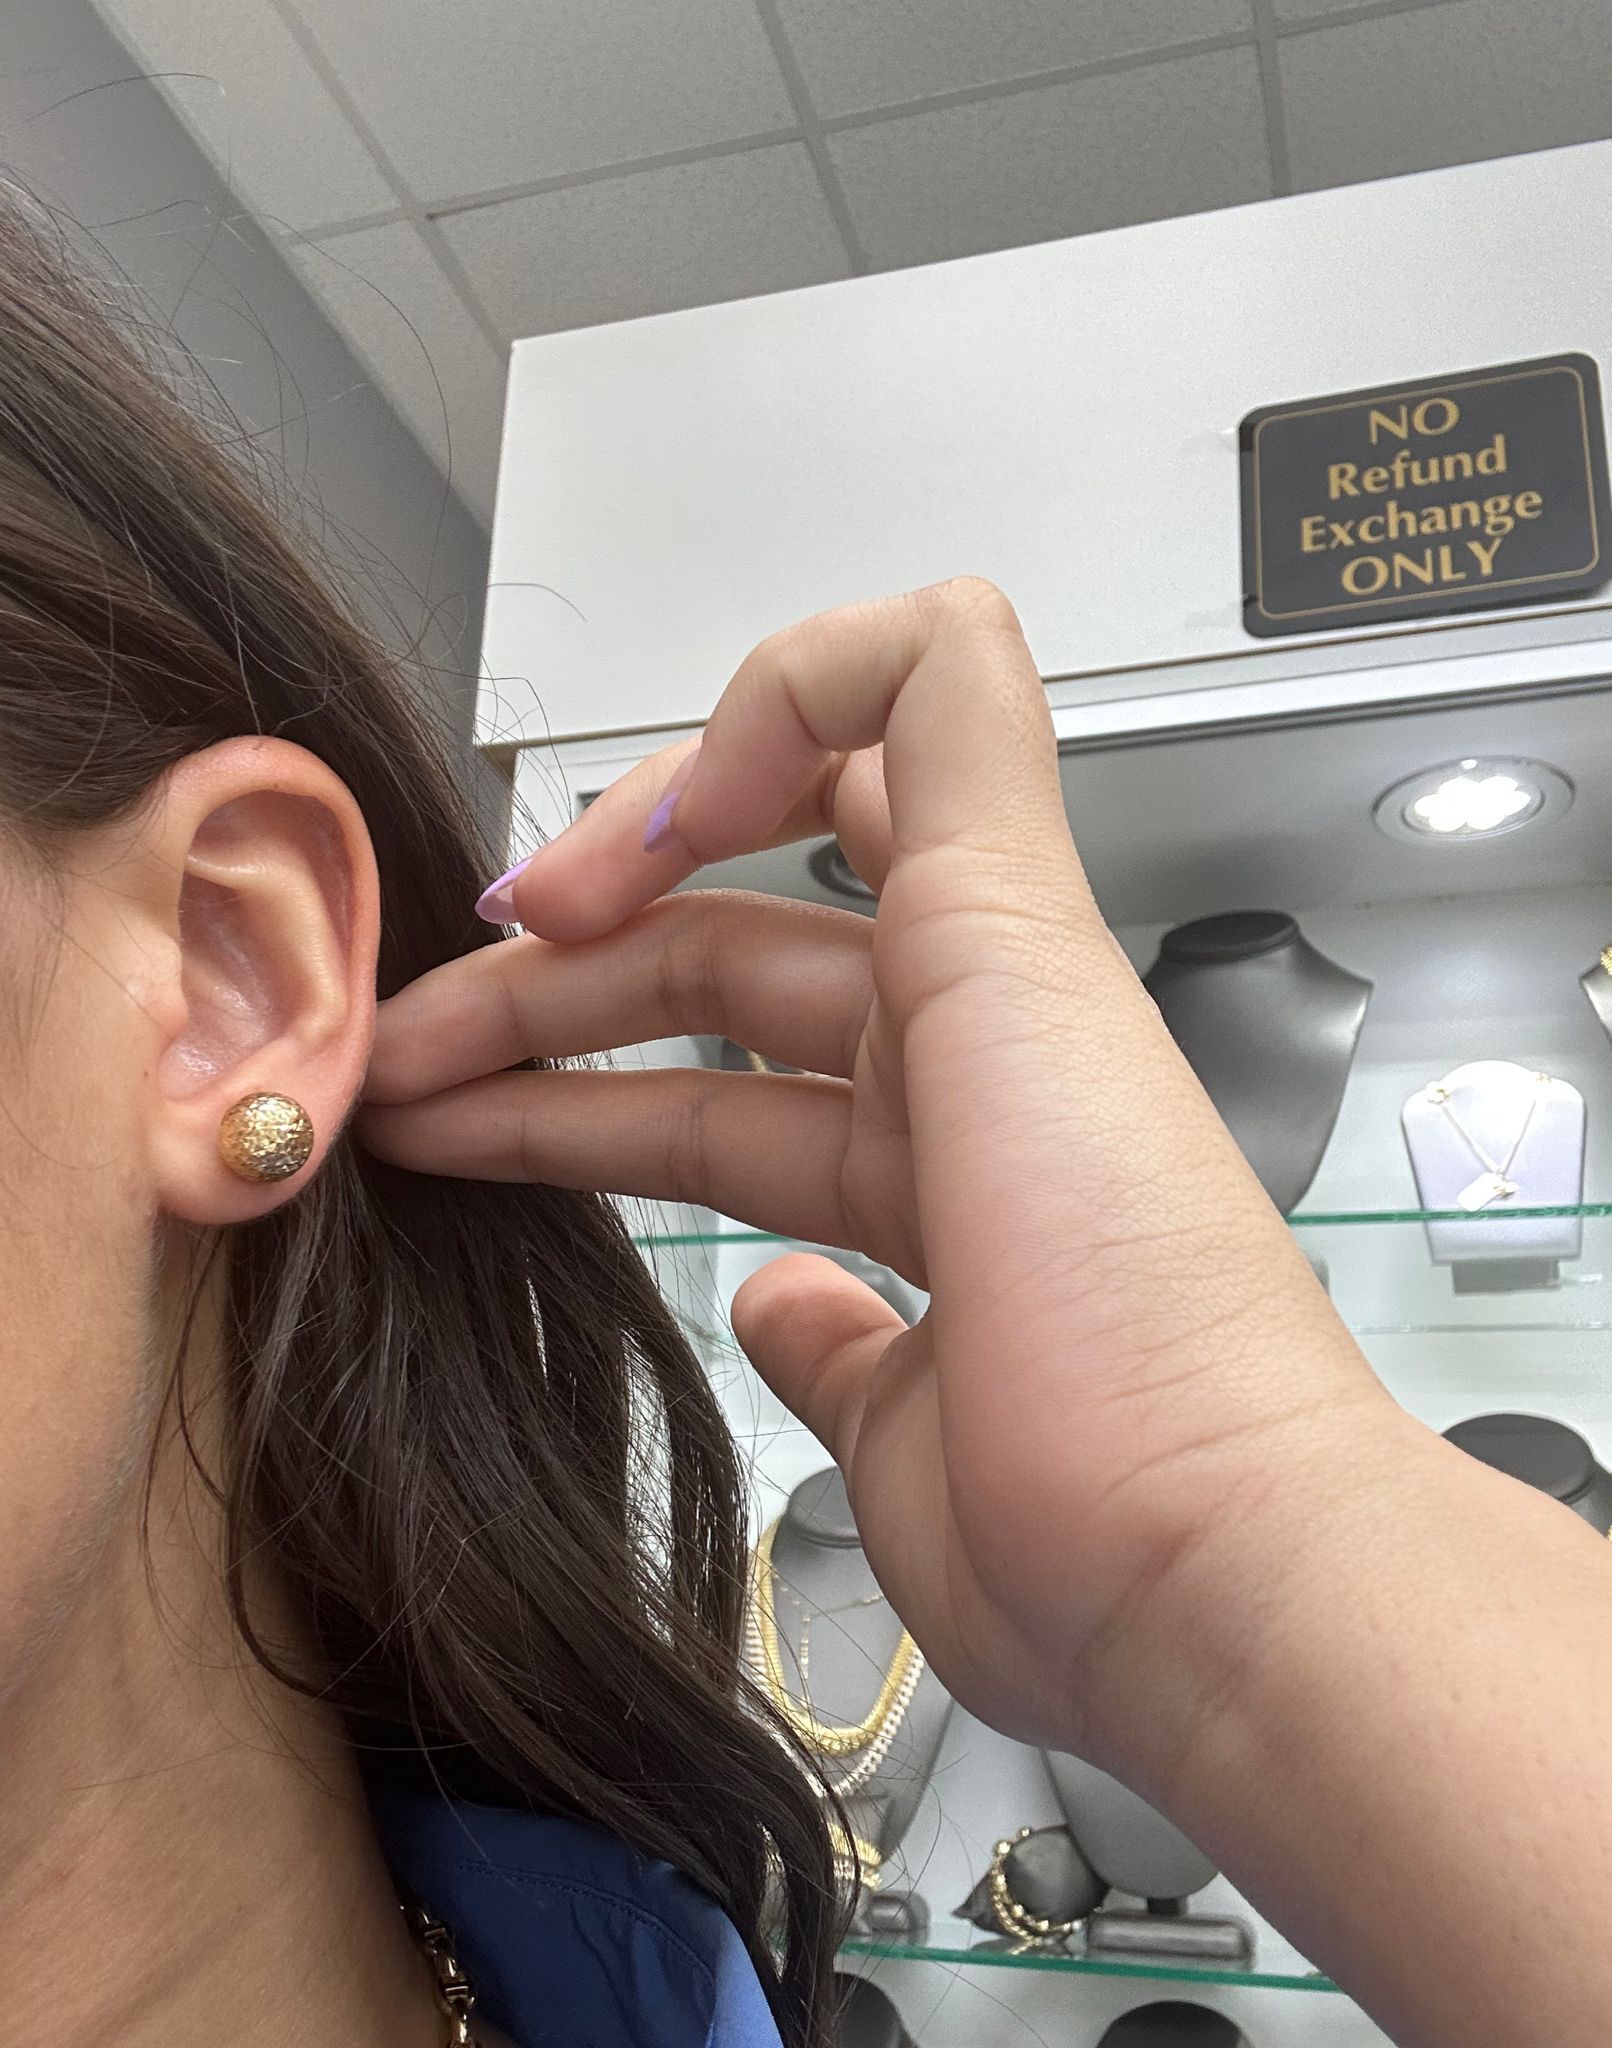 Ball Earrings Diamond Cut 14k